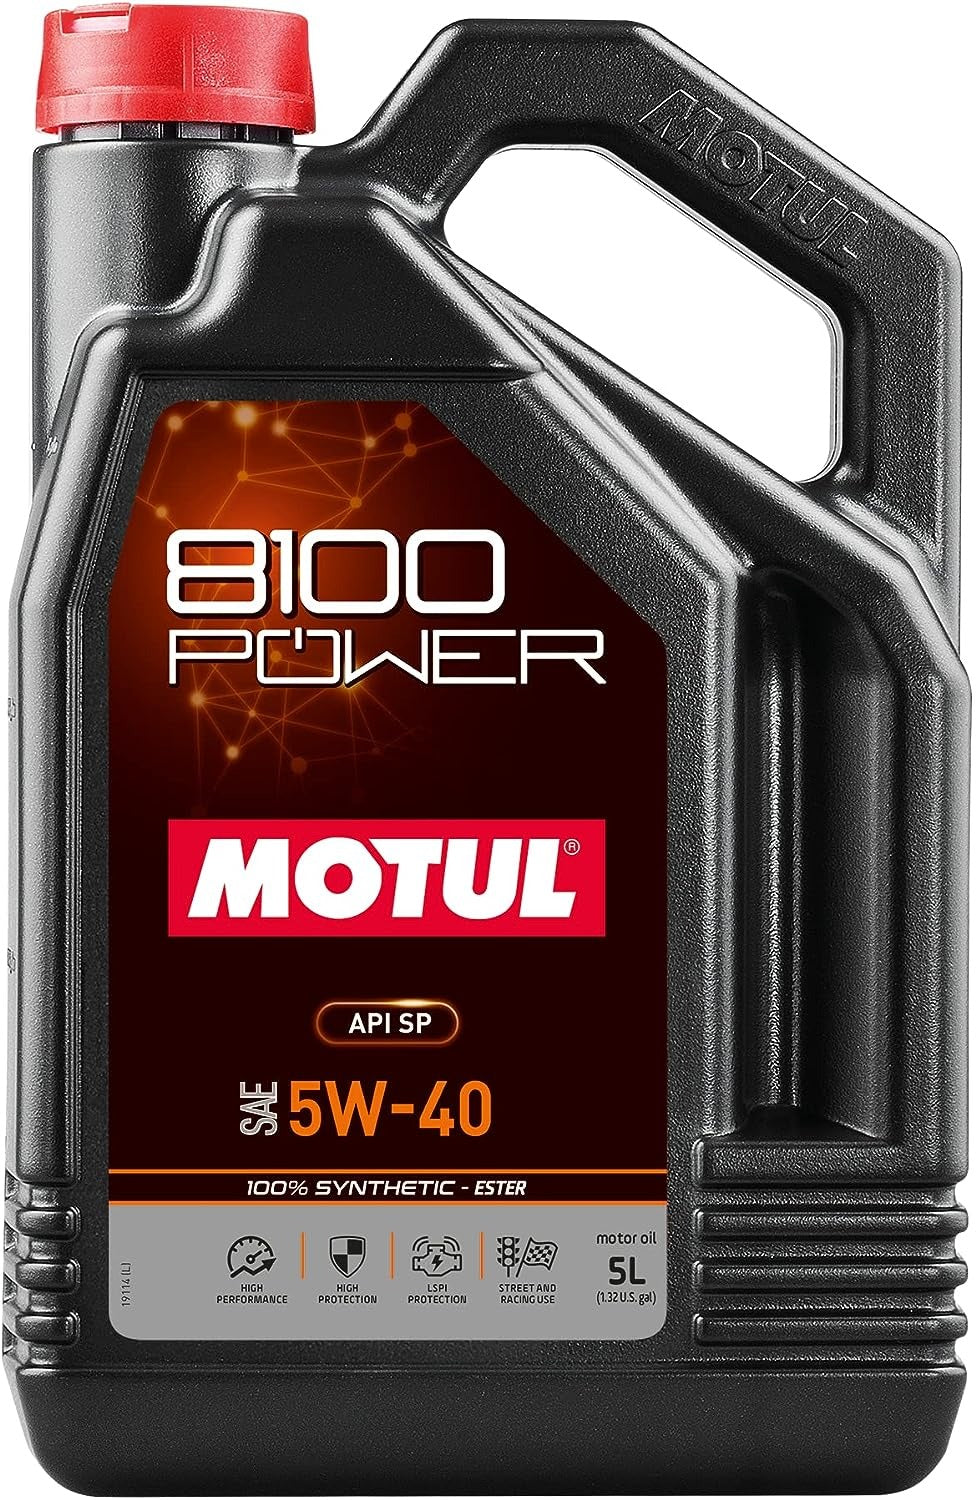 Motul 111809 8100 POWER 5W-40 Motor Oil 100% Synthetic Ester 5